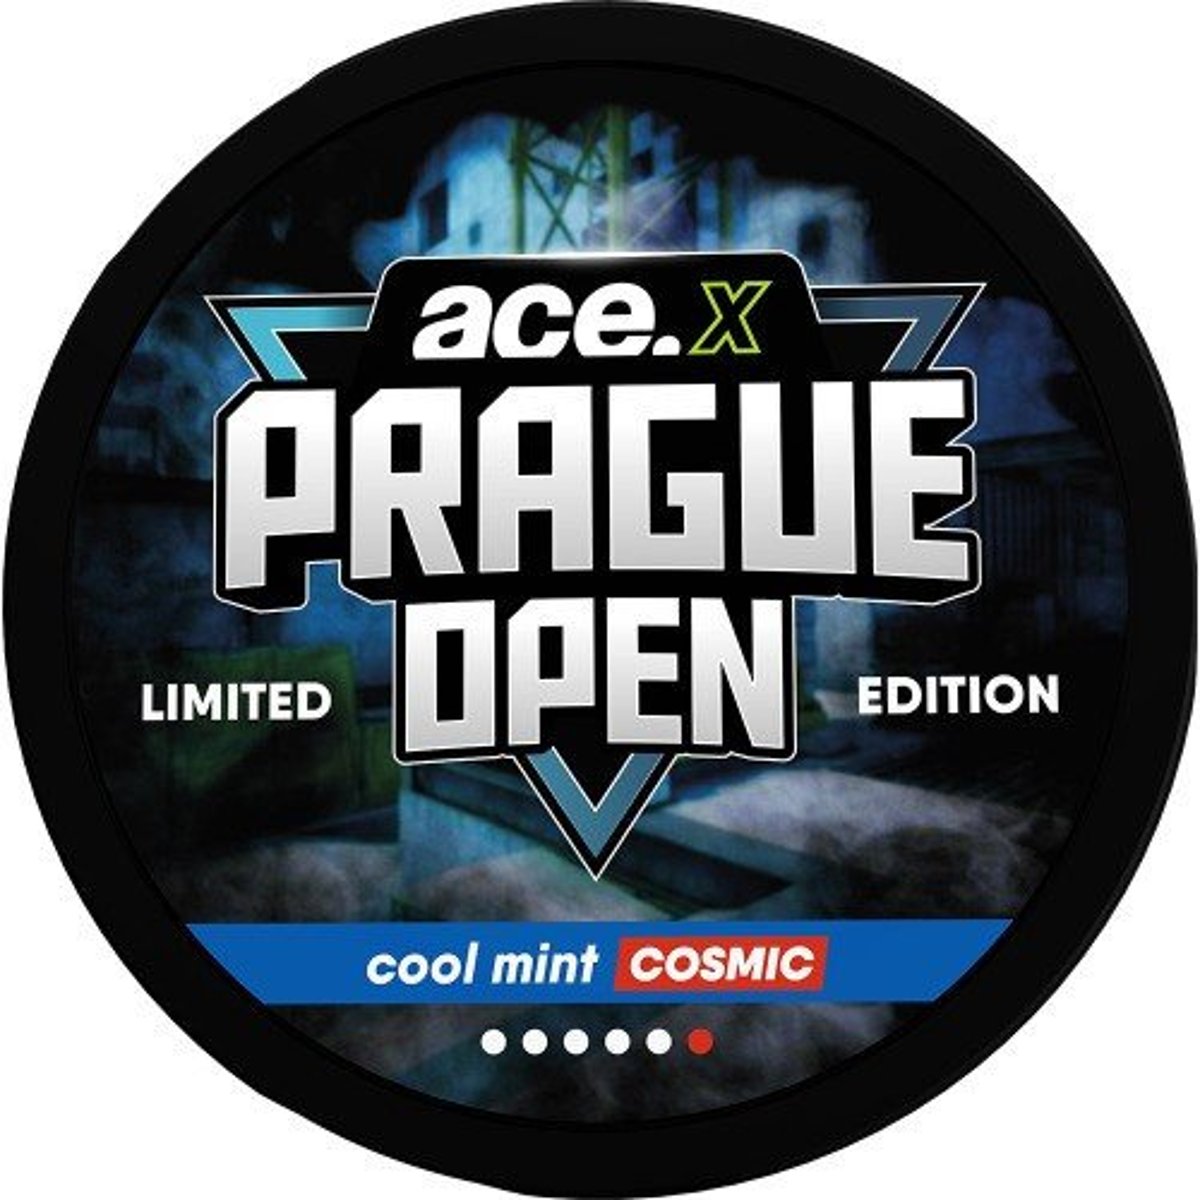 ACE X Cosmic Cool Mint Prague Open